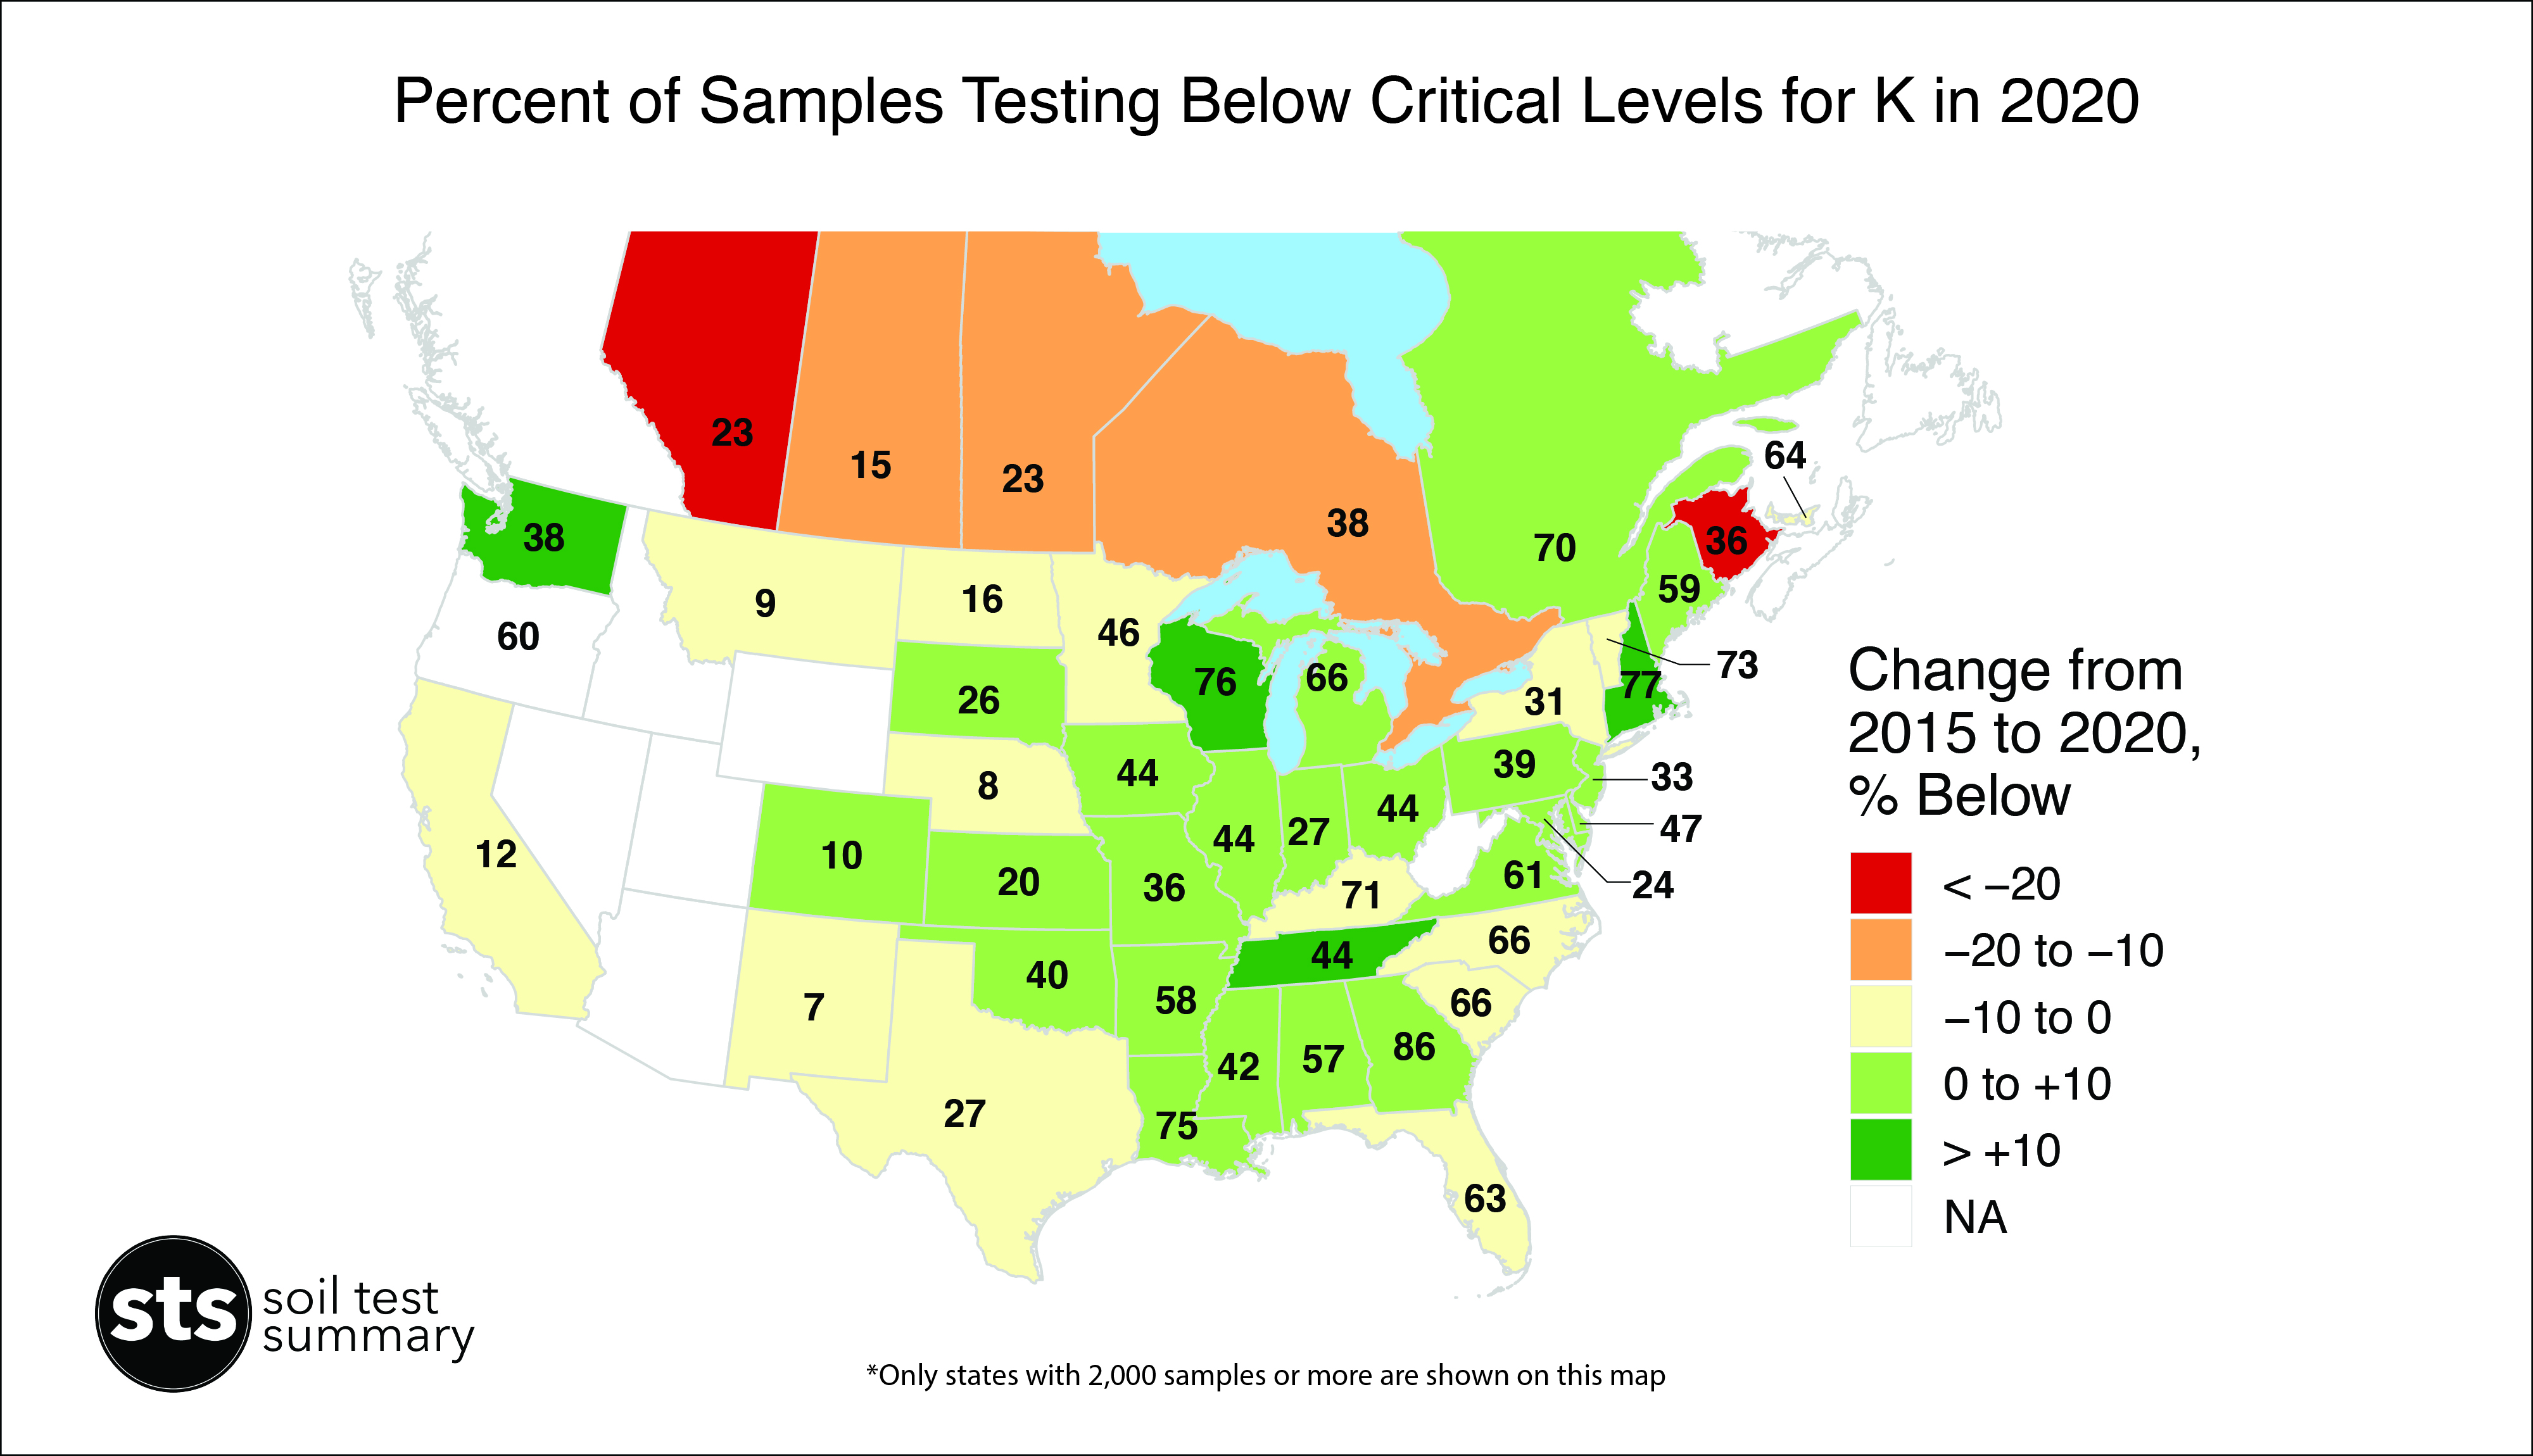 Percent of Samples Testing Below Critical Levels in 2020